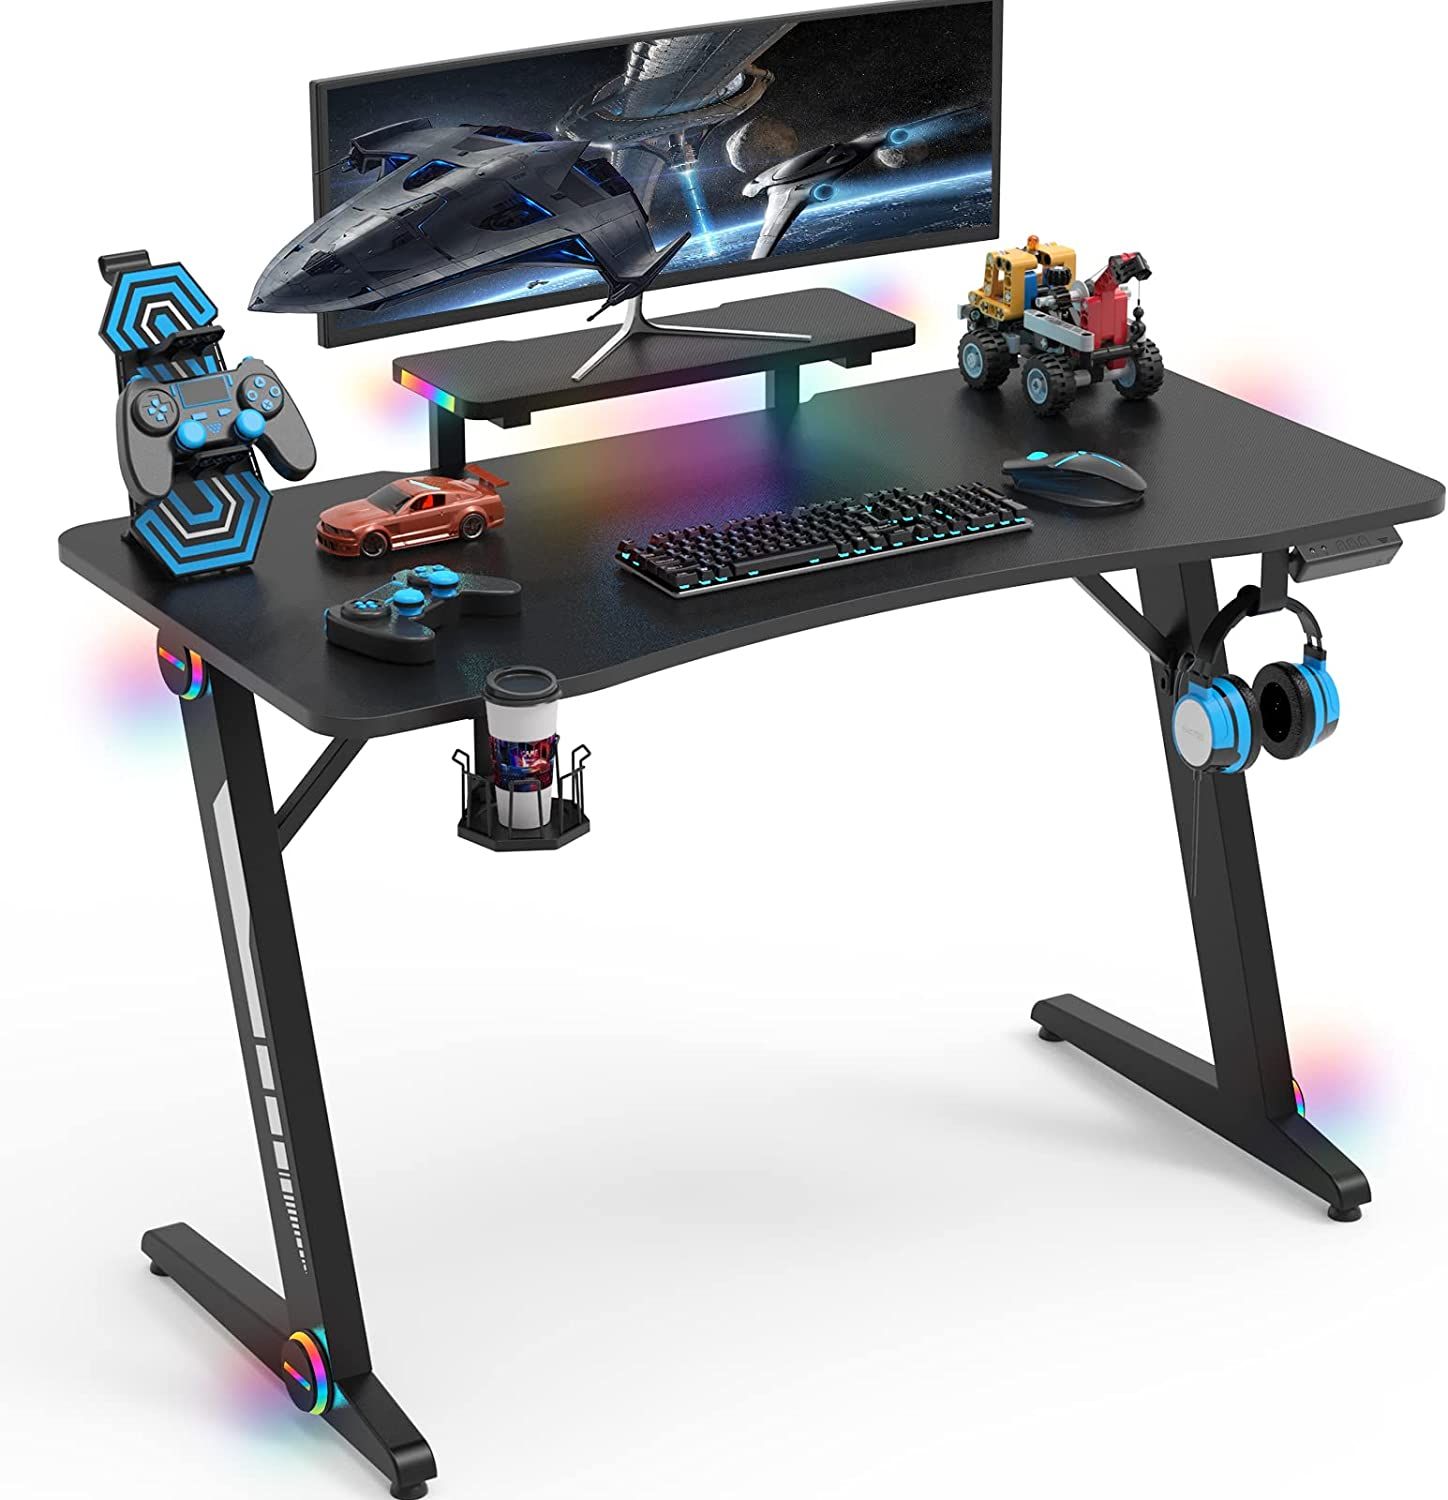 JOY worker Gaming Desk